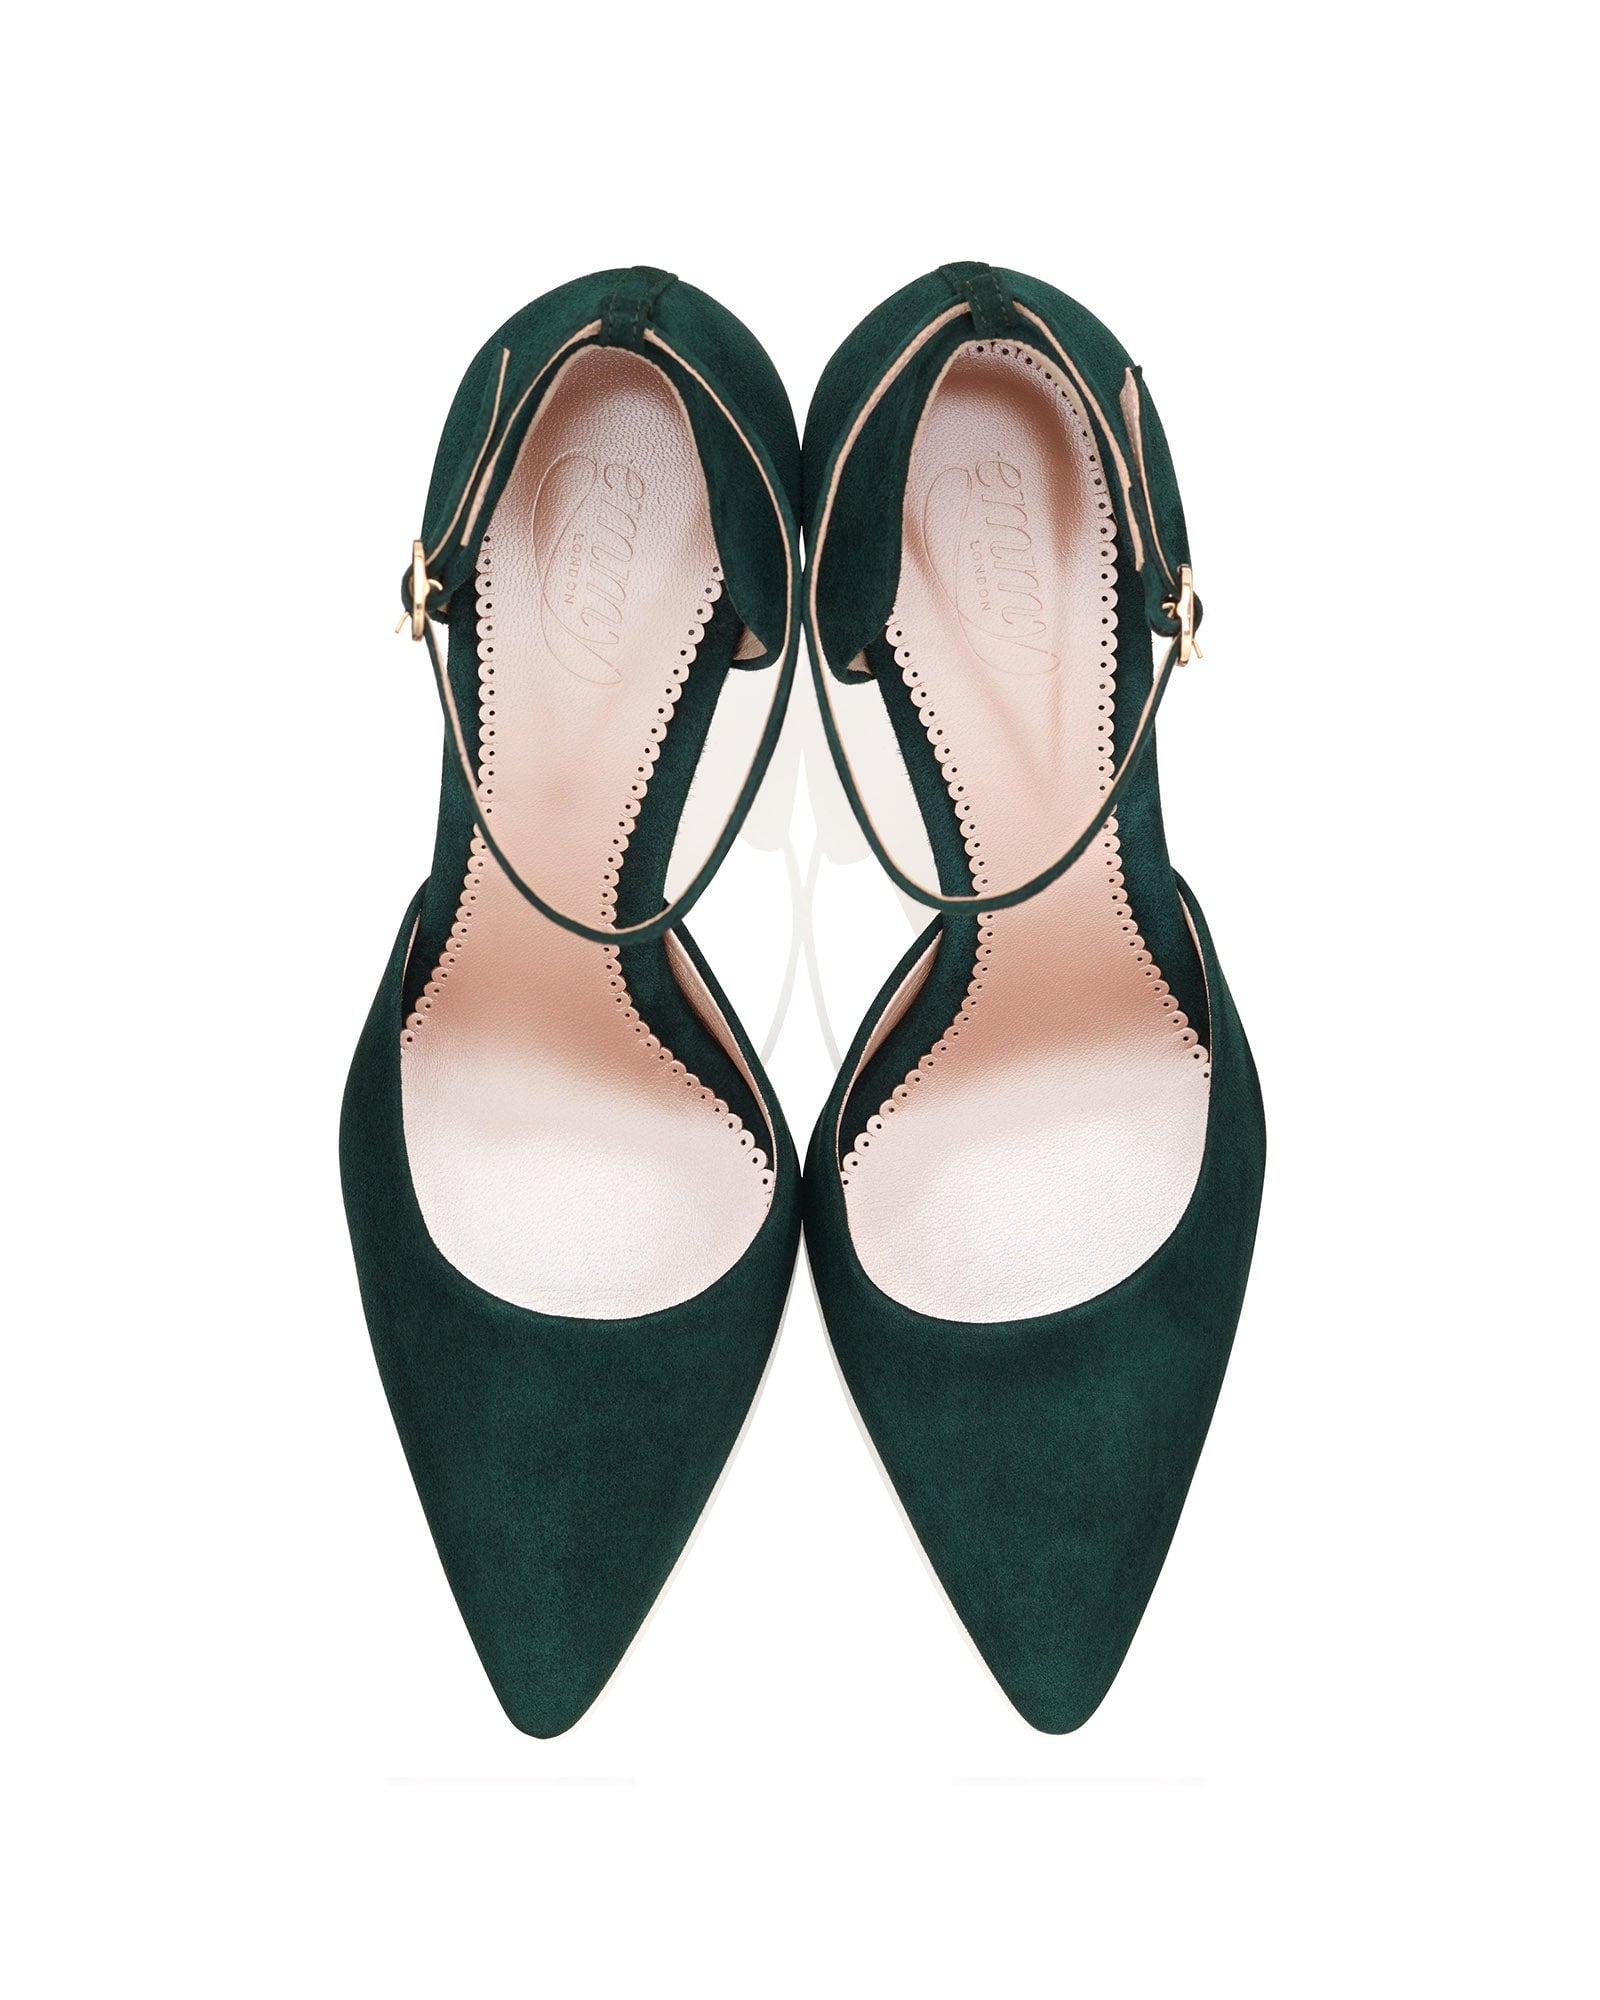 Harriet Greenery Fashion Shoe Dark Green Suede Court Shoes  image